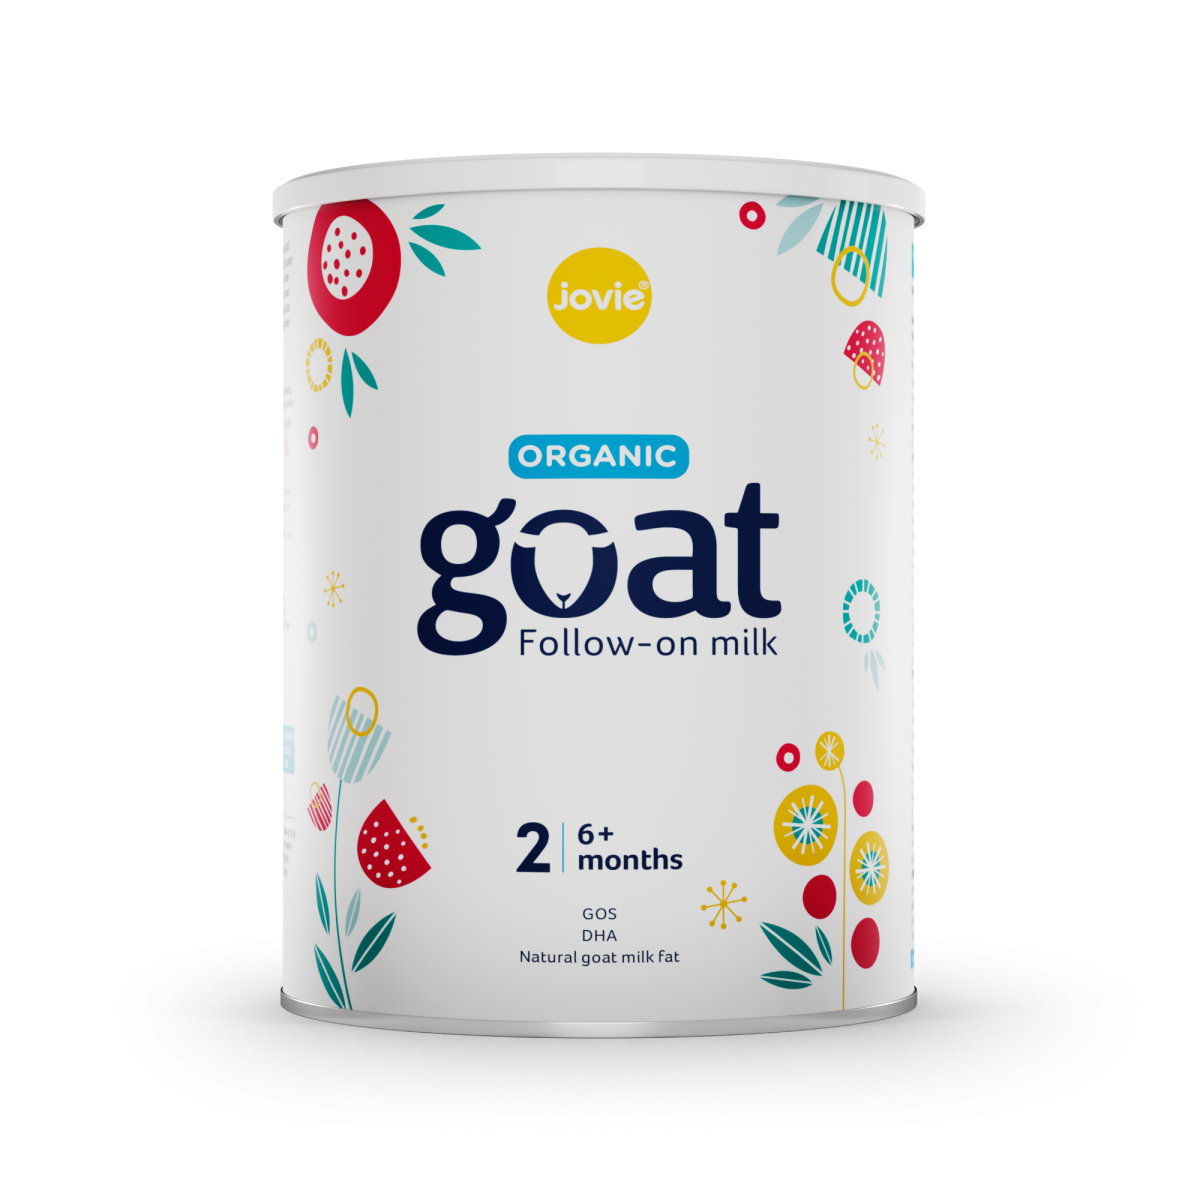 Jovie Goat Organic Follow-on Milk - front